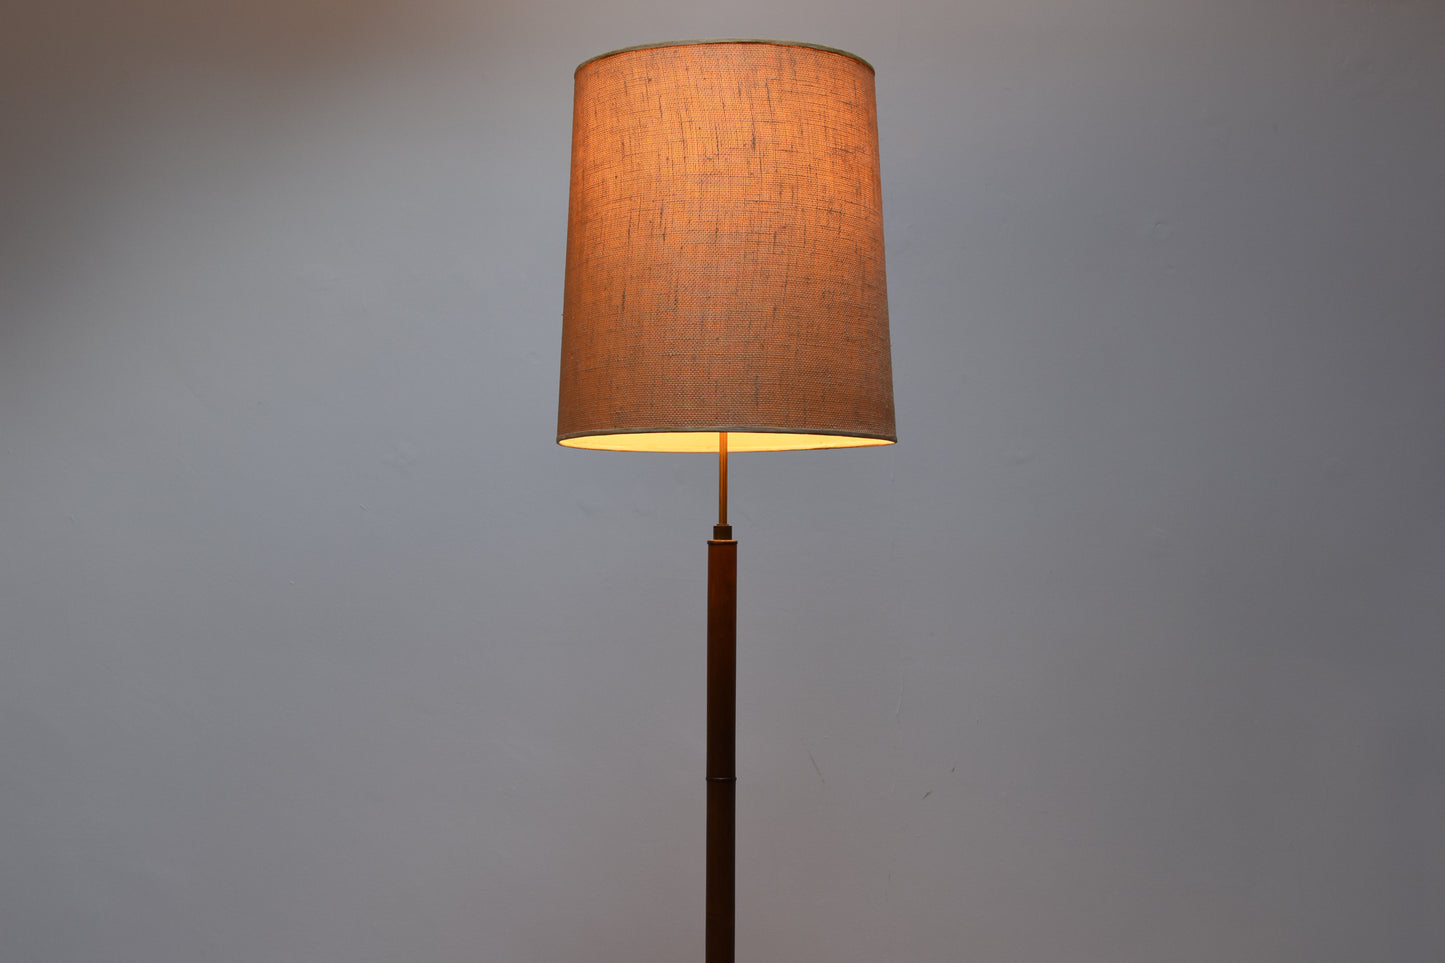 Teak floor lamp with hessian shade